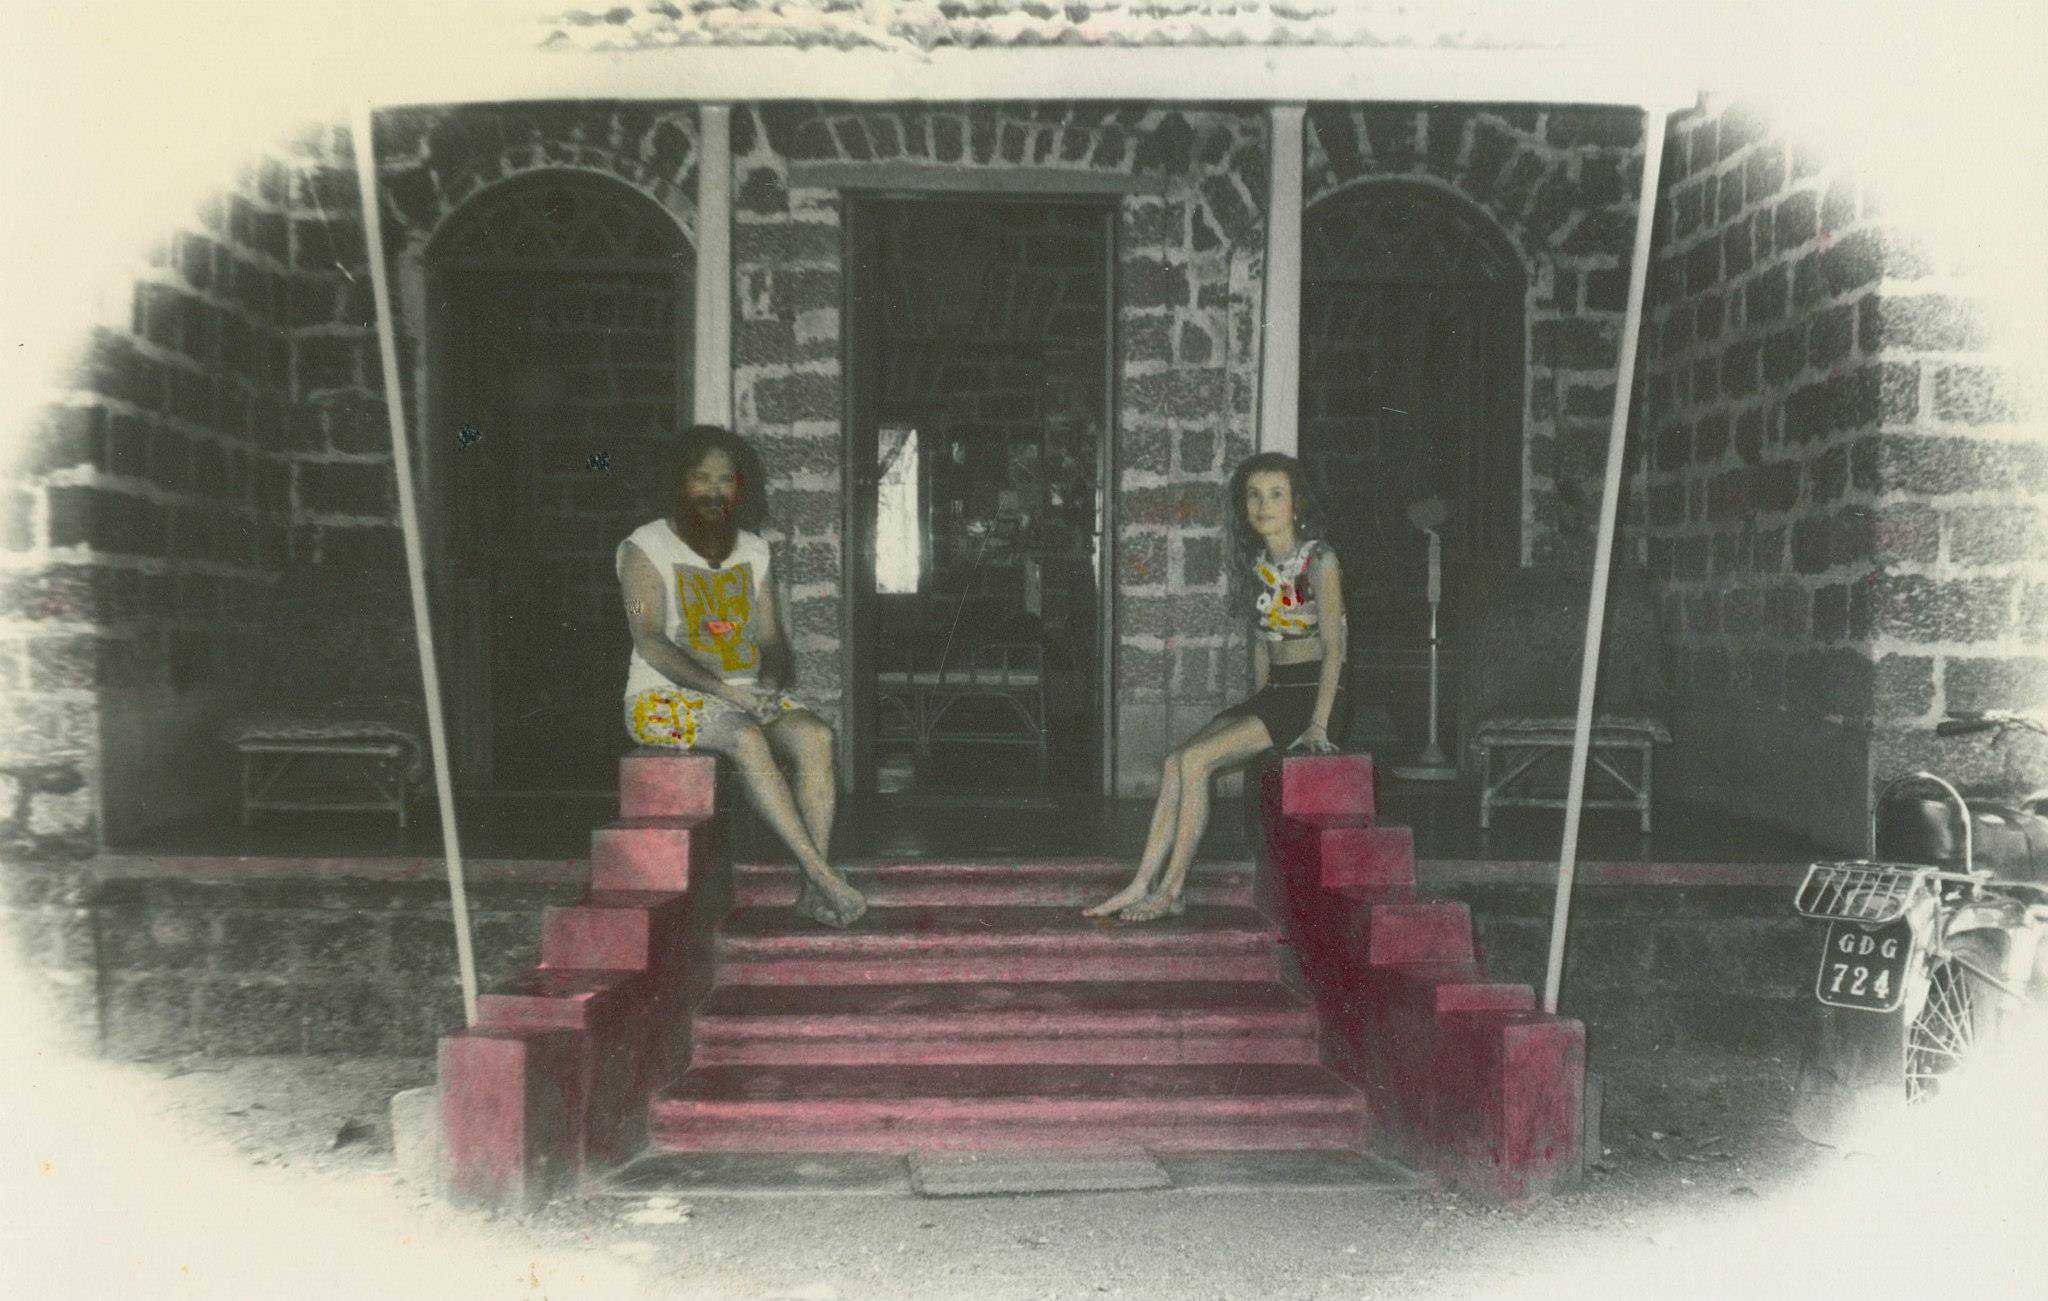 Goa Gil и Arriane в их доме в Гоа. Фото сделано в начале 1970х (Photo by Goa Gil).